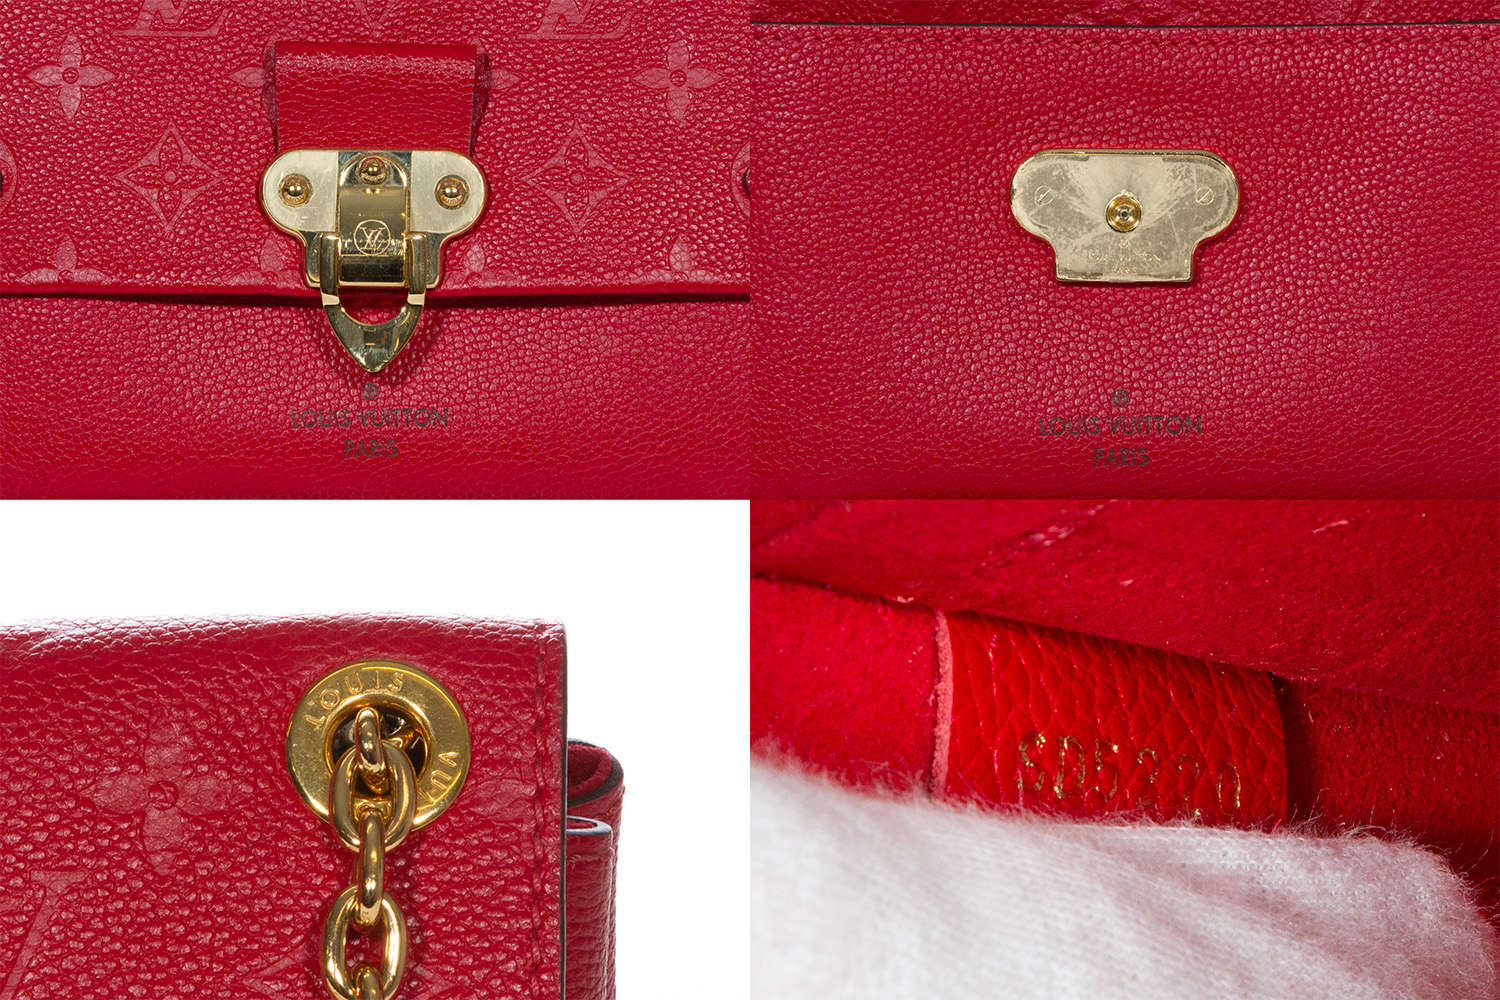 Louis Vuitton Vavin BB Leather Scarlet